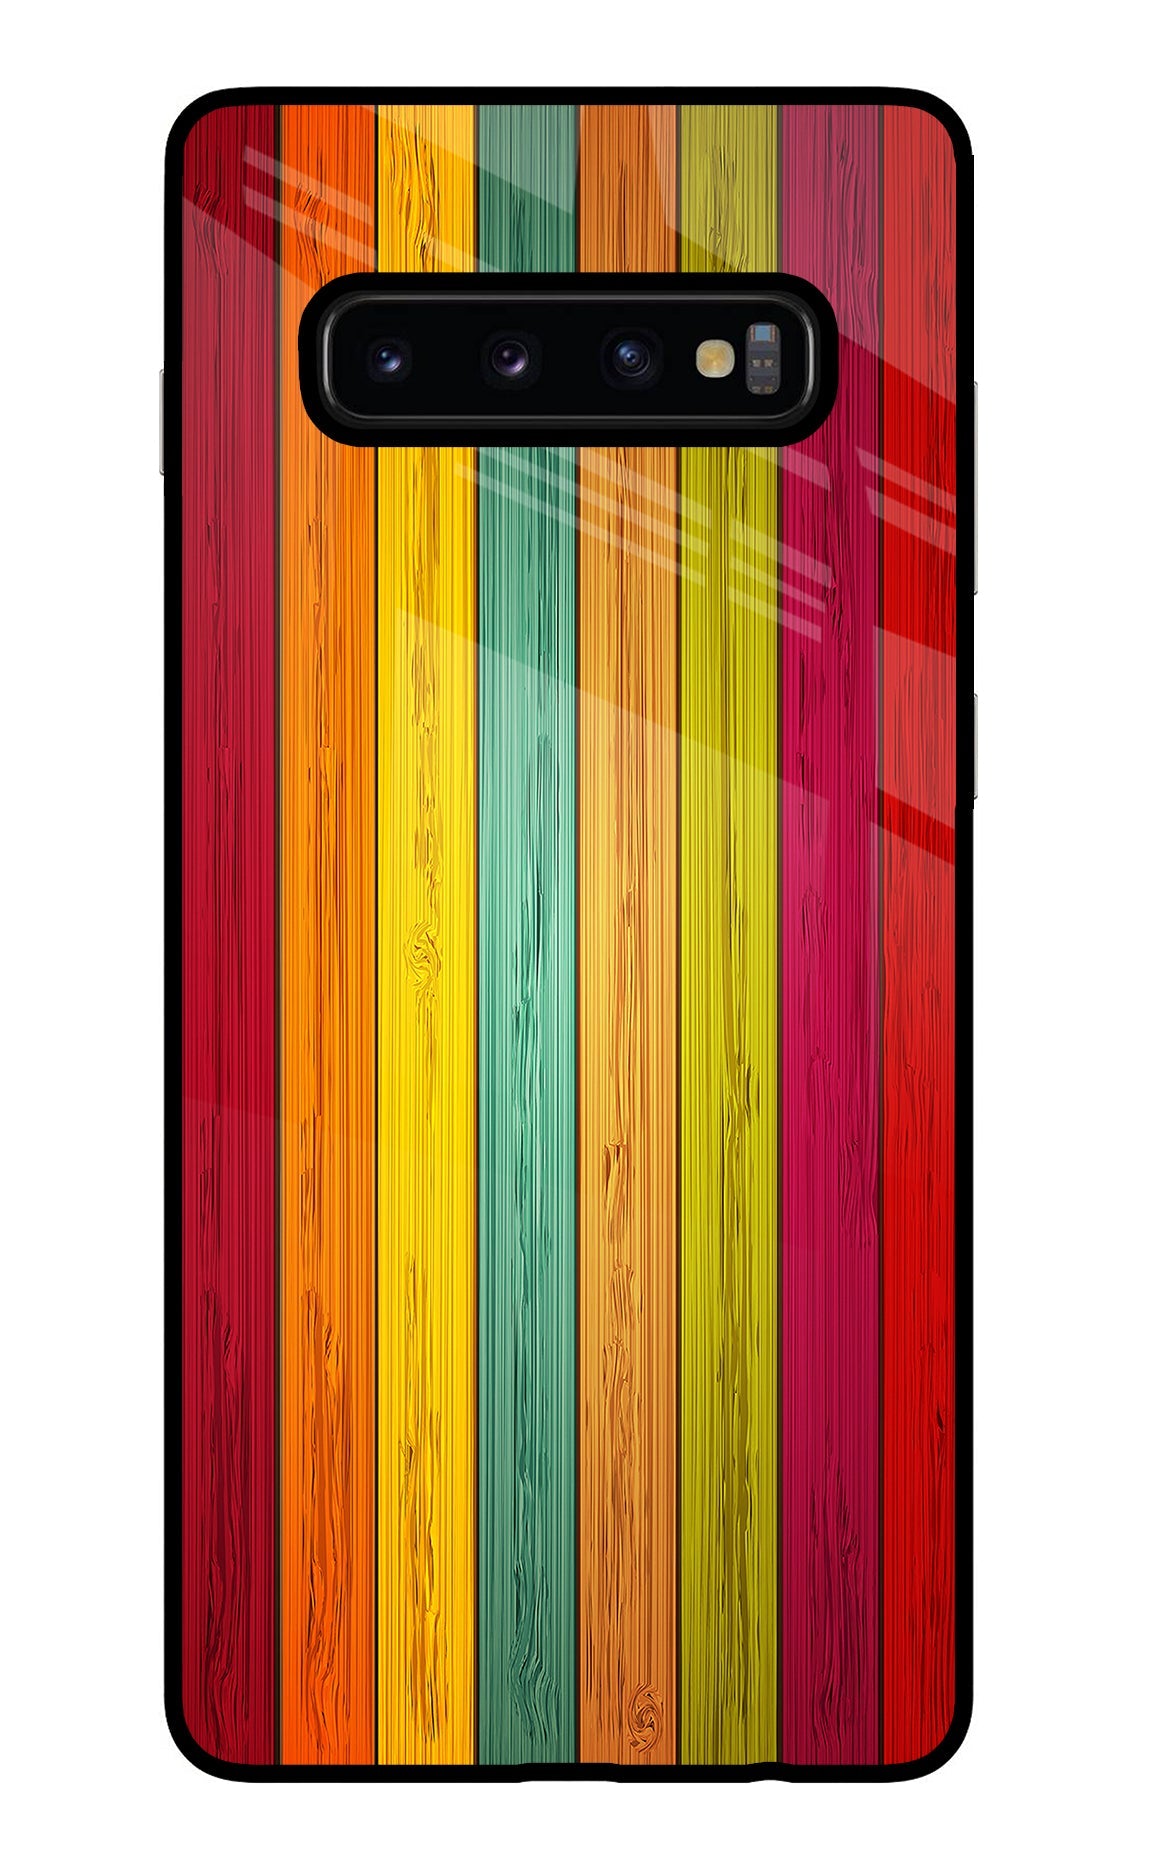 Multicolor Wooden Samsung S10 Plus Glass Case